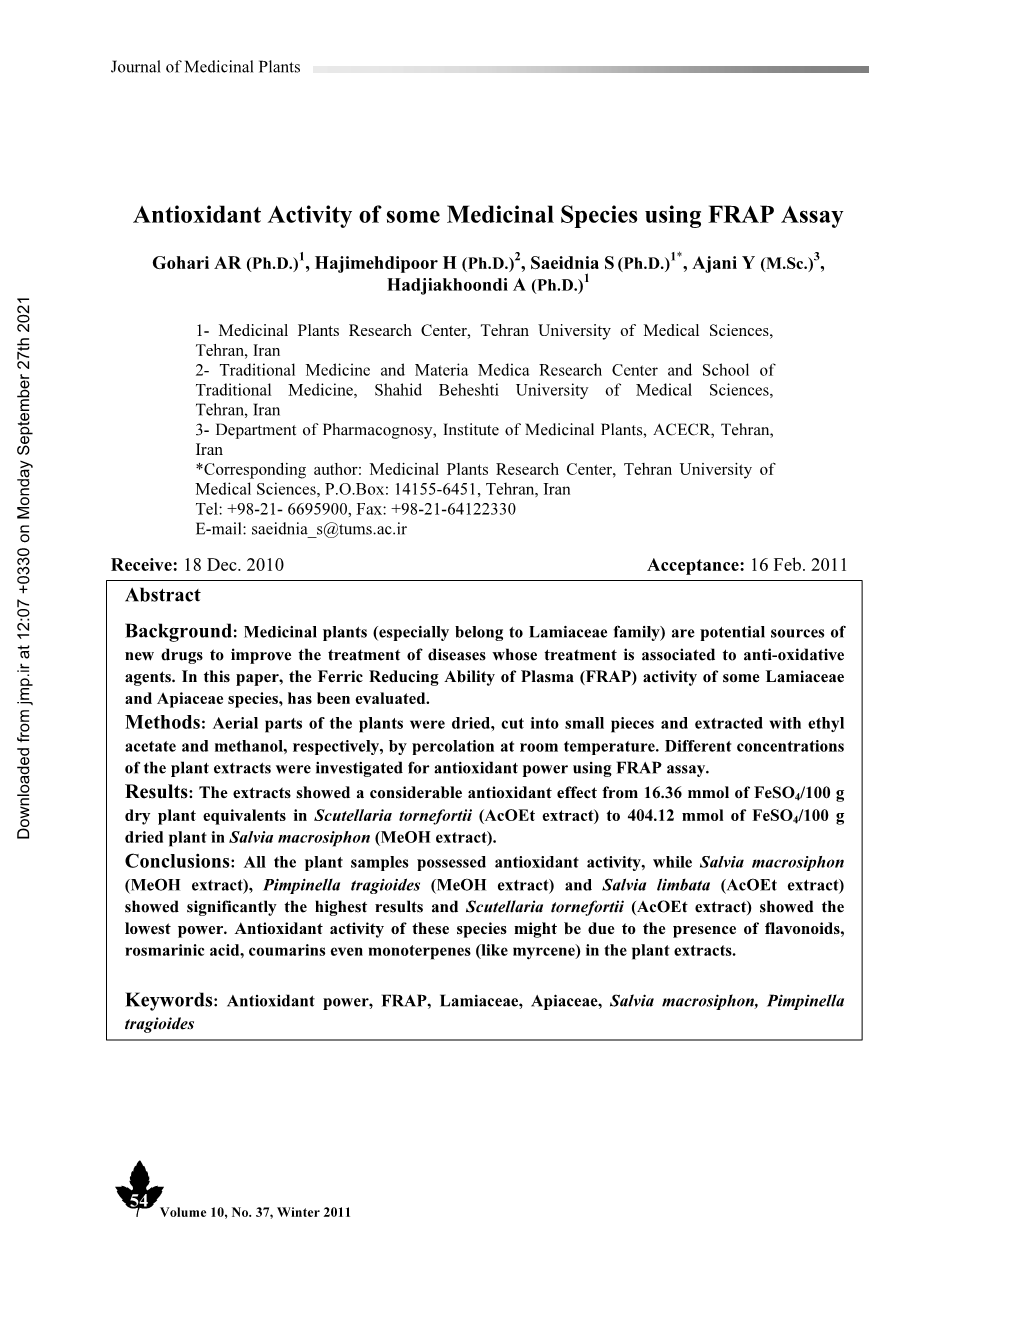 Antioxidant Activity of Some Medicinal Species Using FRAP Assay